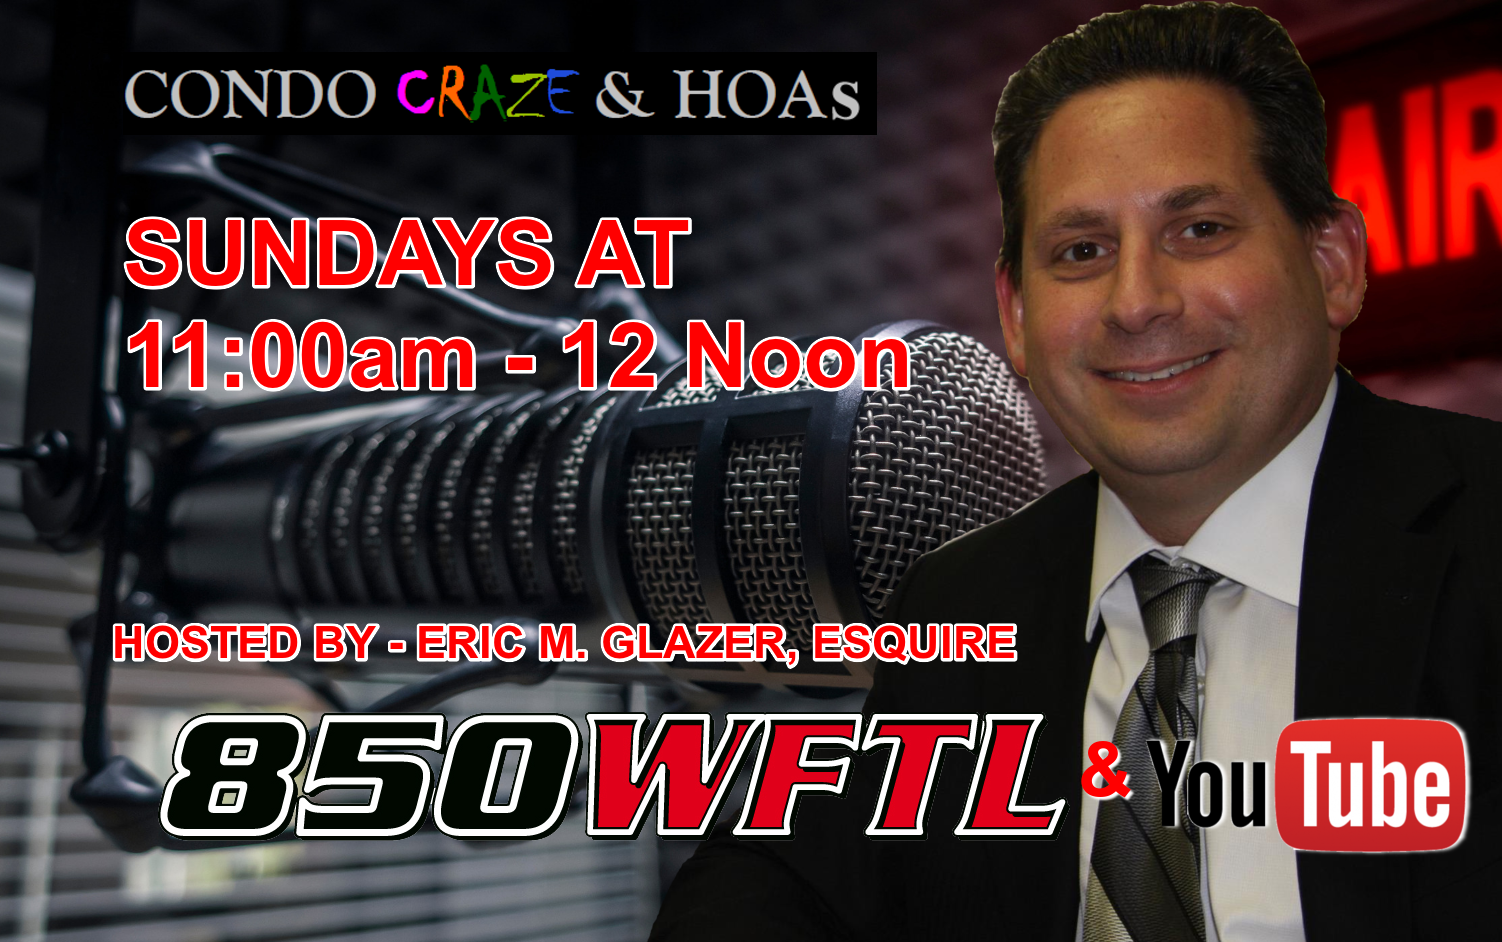 Condo Craze & HOA’s” (RADIO SHOW) on 850AM/WFTL & YouTube with Eric Glazer Sundays 11am-12noon.